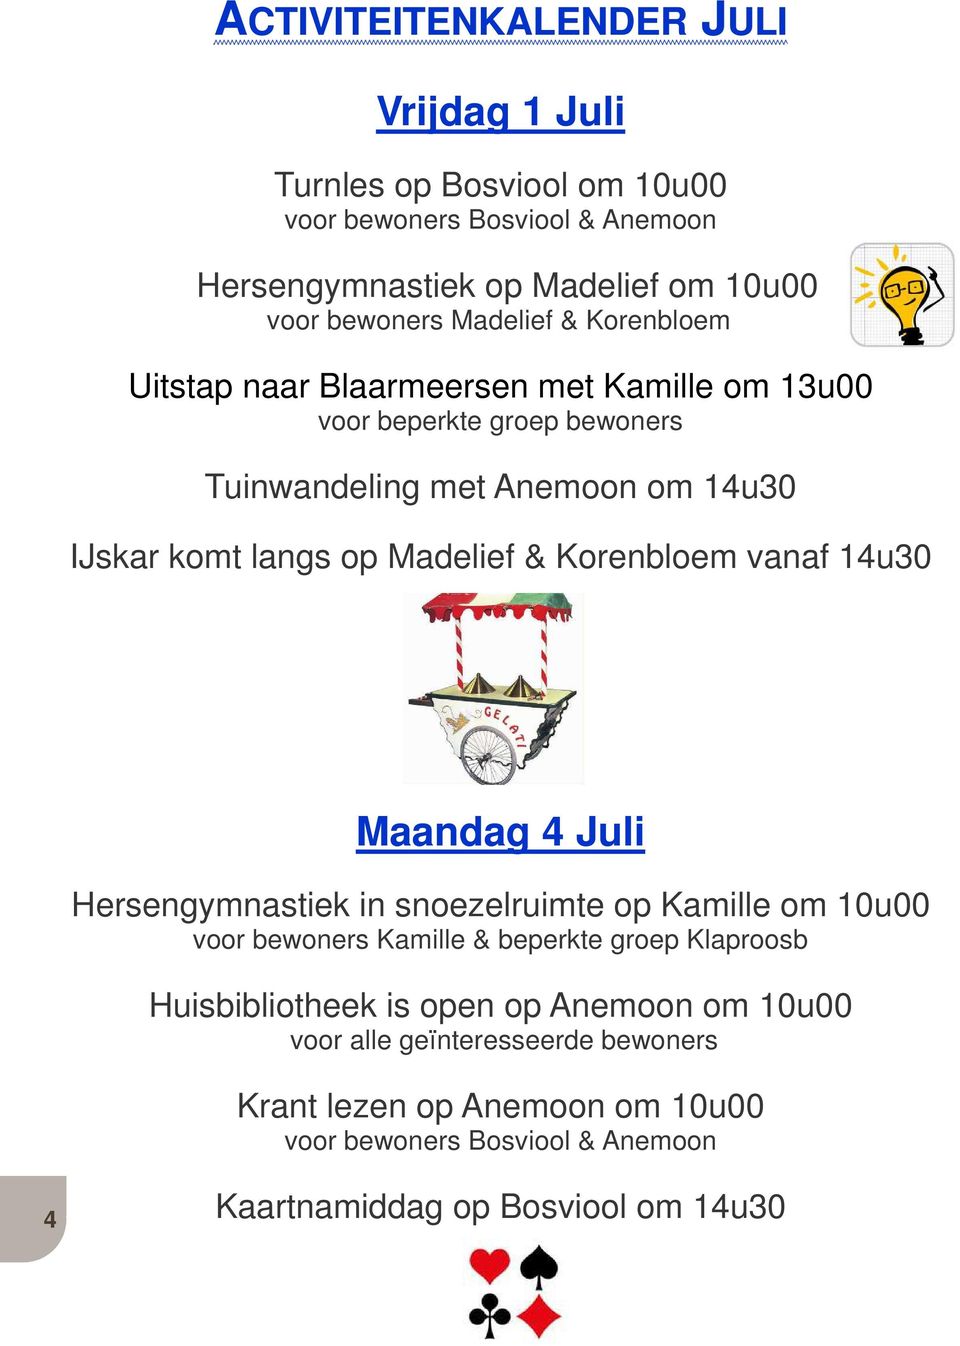 14u30 Maandag 4 Juli Hersengymnastiek in snoezelruimte op Kamille om 10u00 voor bewoners Kamille & beperkte groep Klaproosb